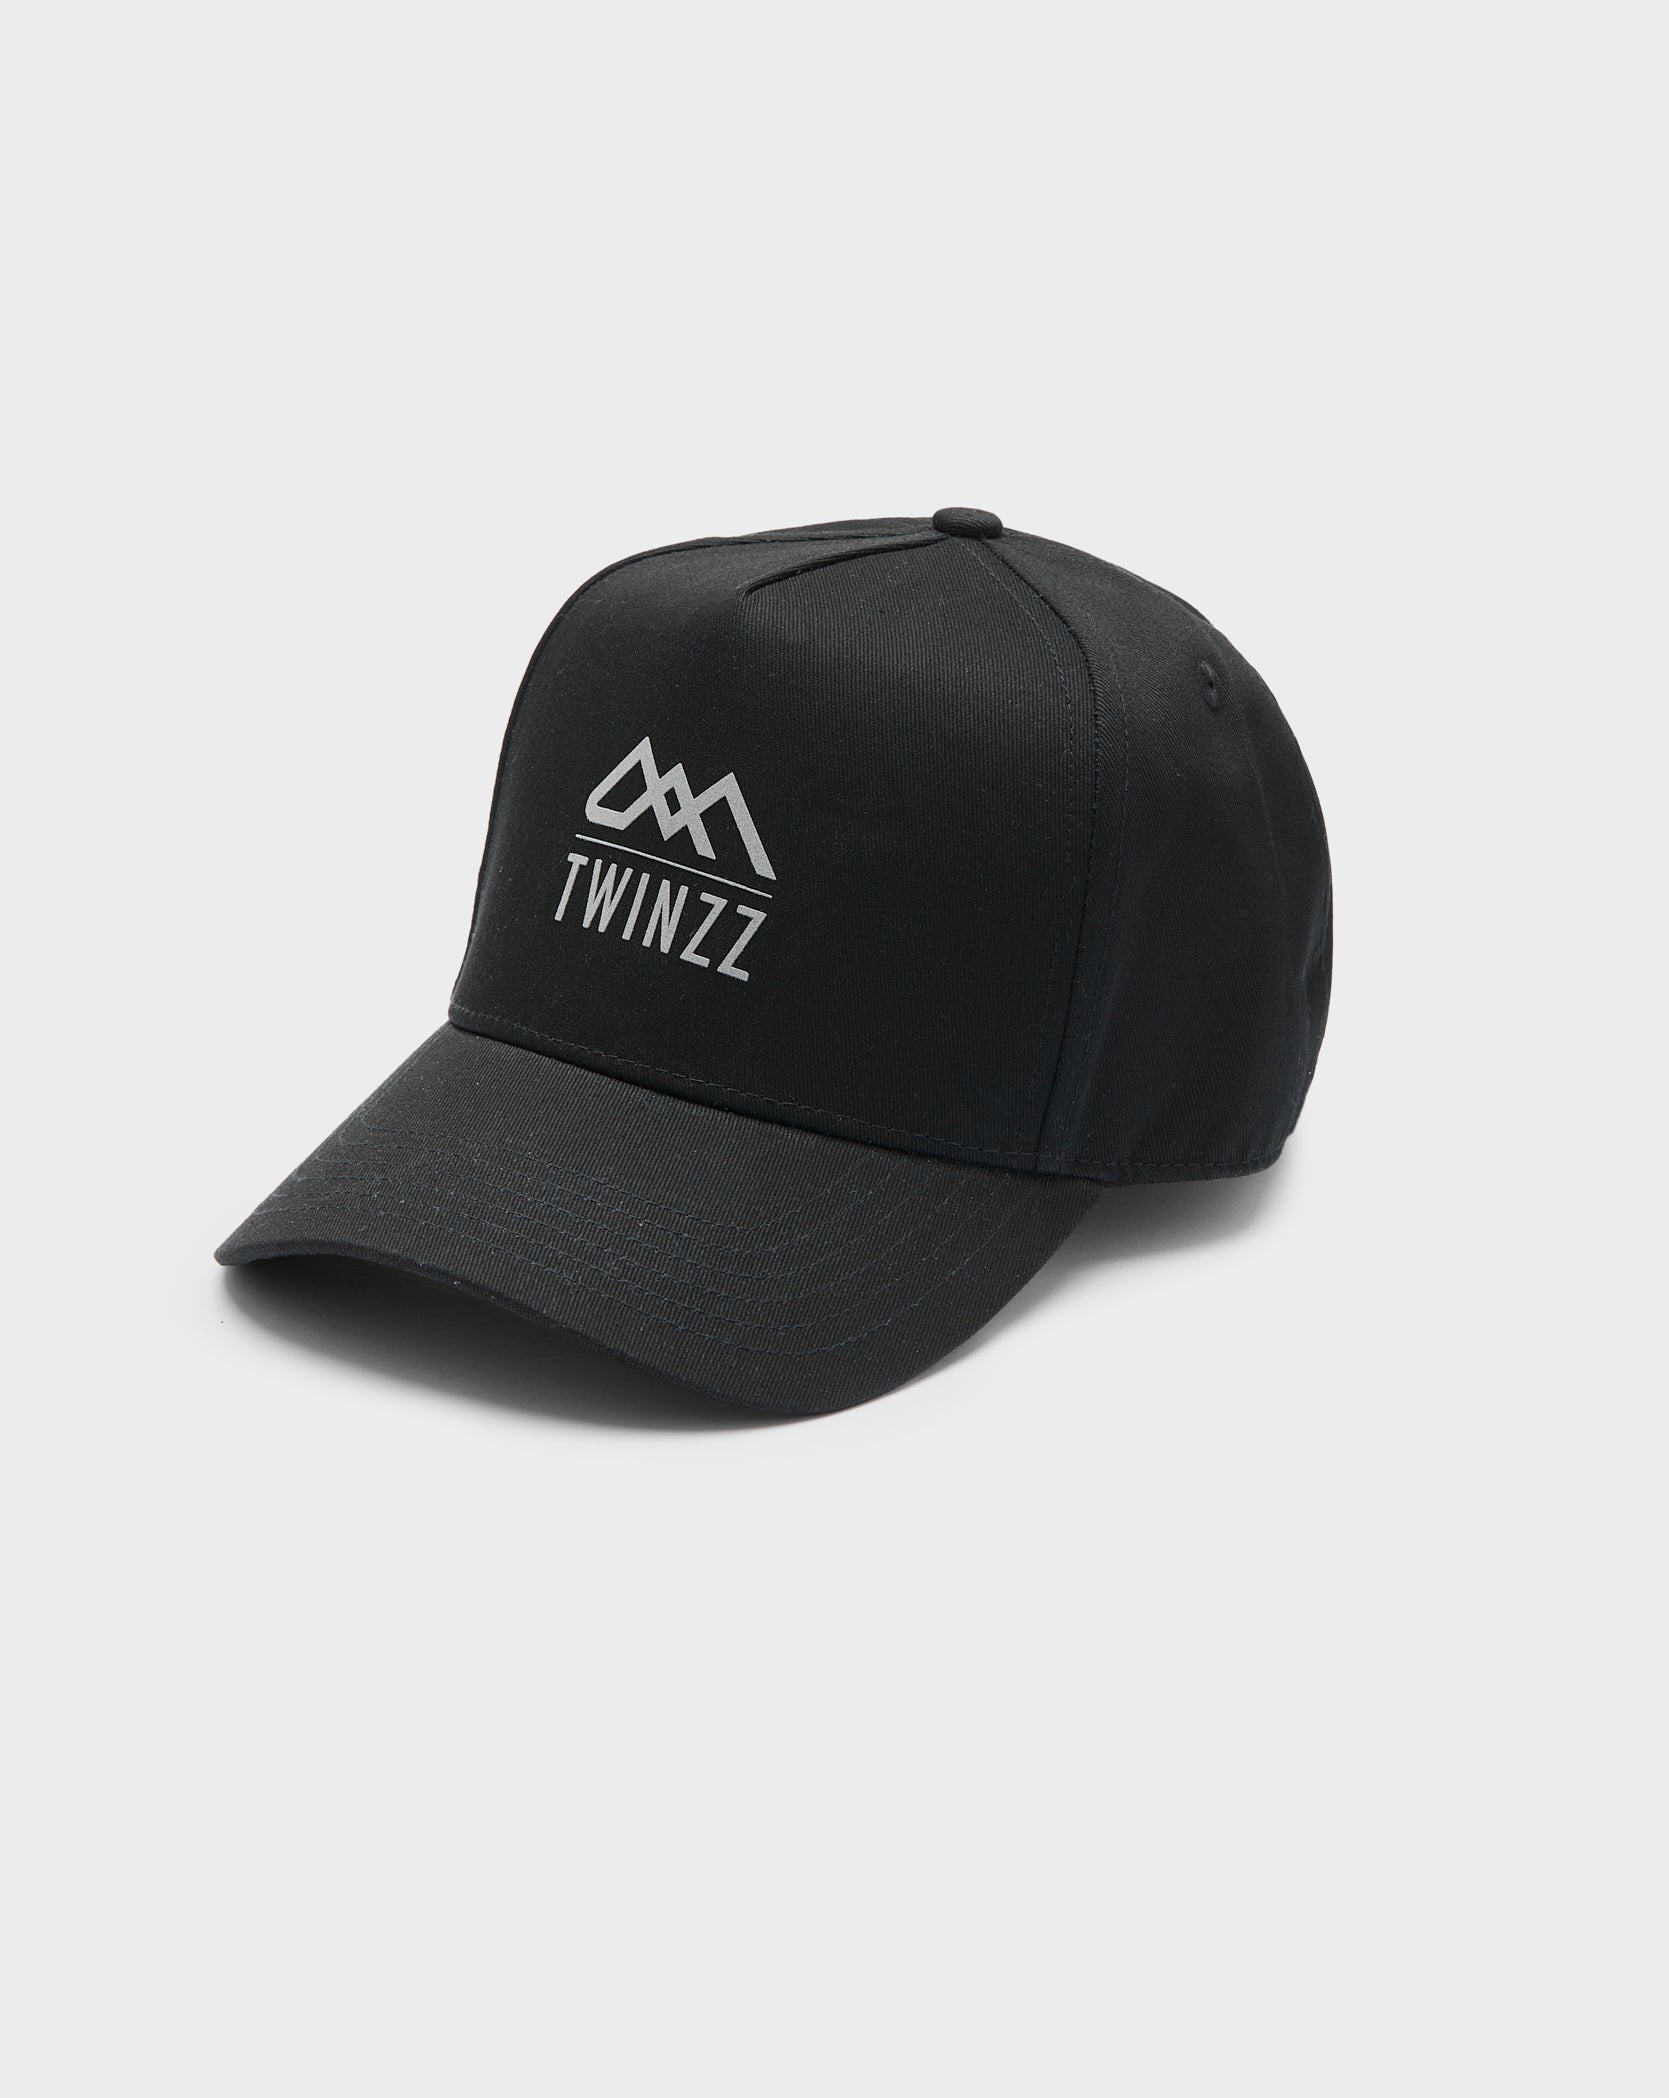 Twinzz black trucker hat with silver logo